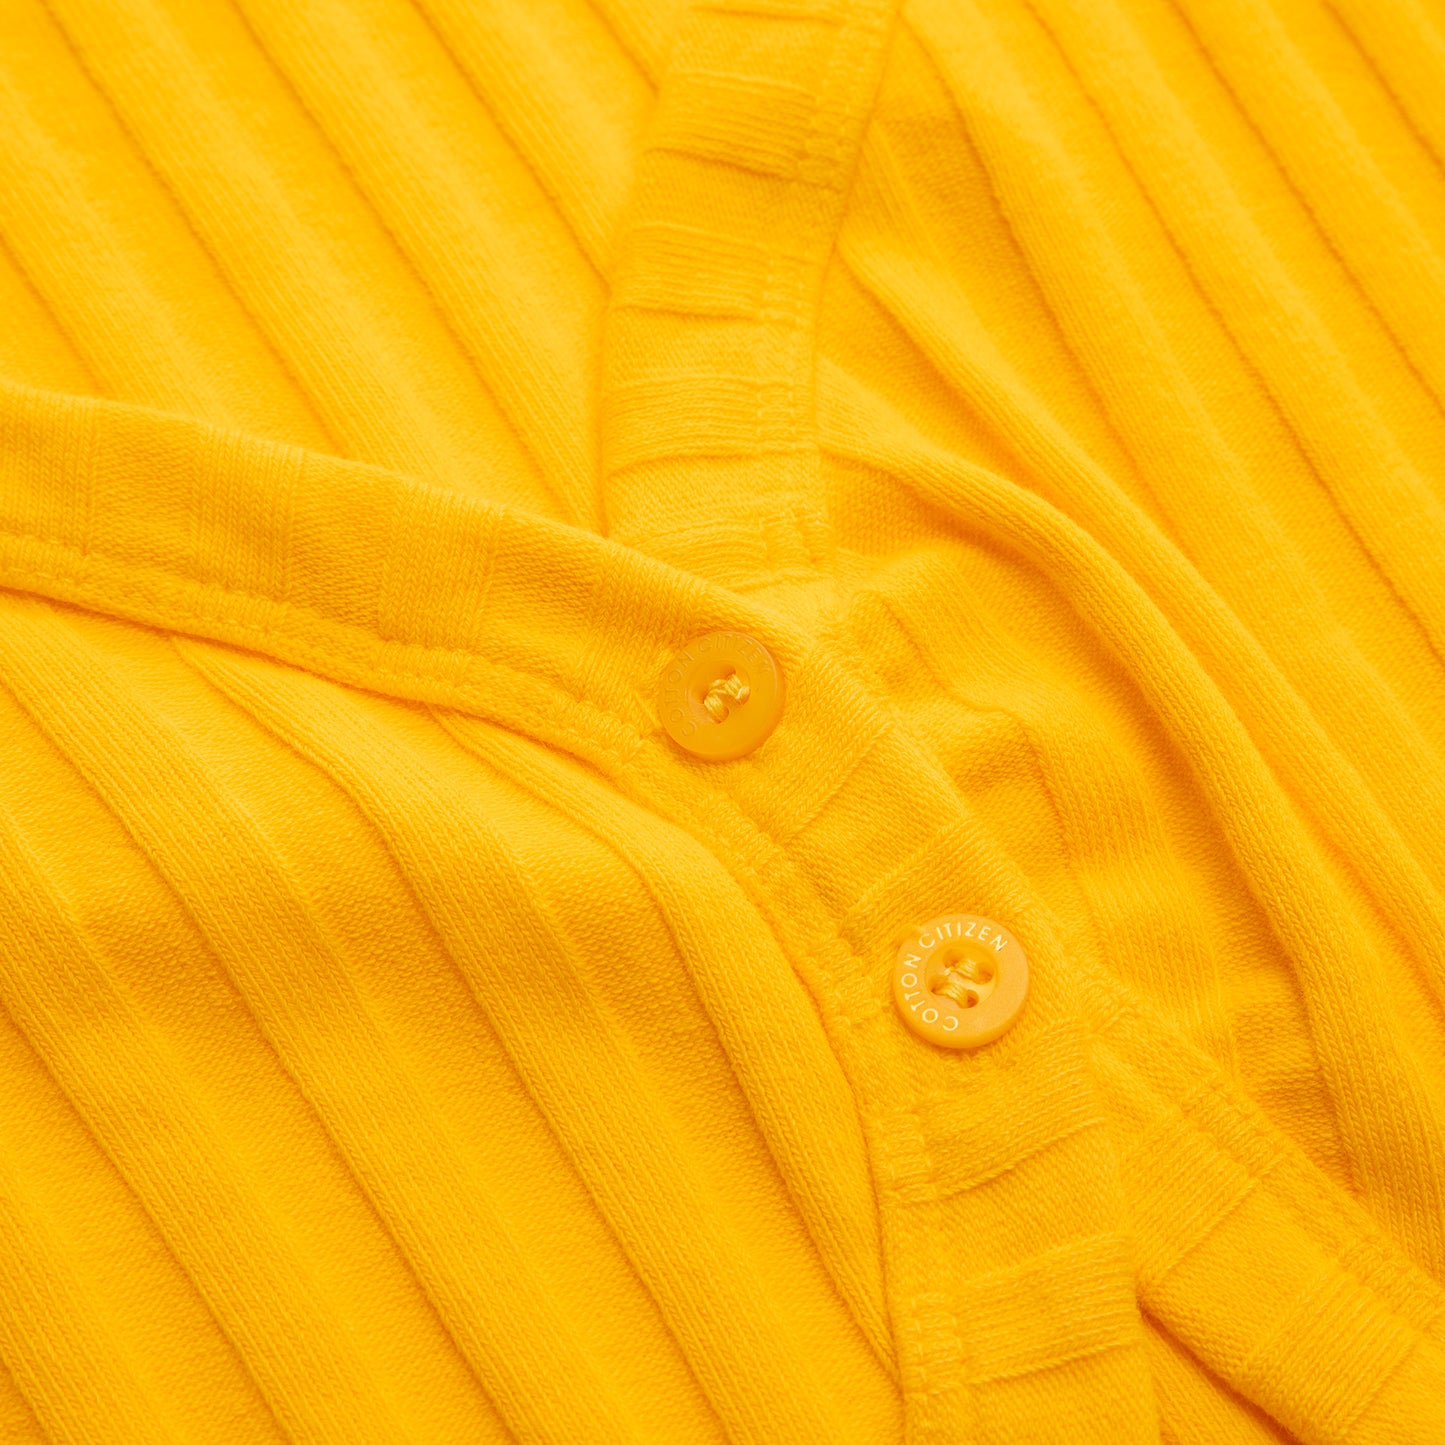 Cotton Citizen Capri Crop Cardigan (Yellow)